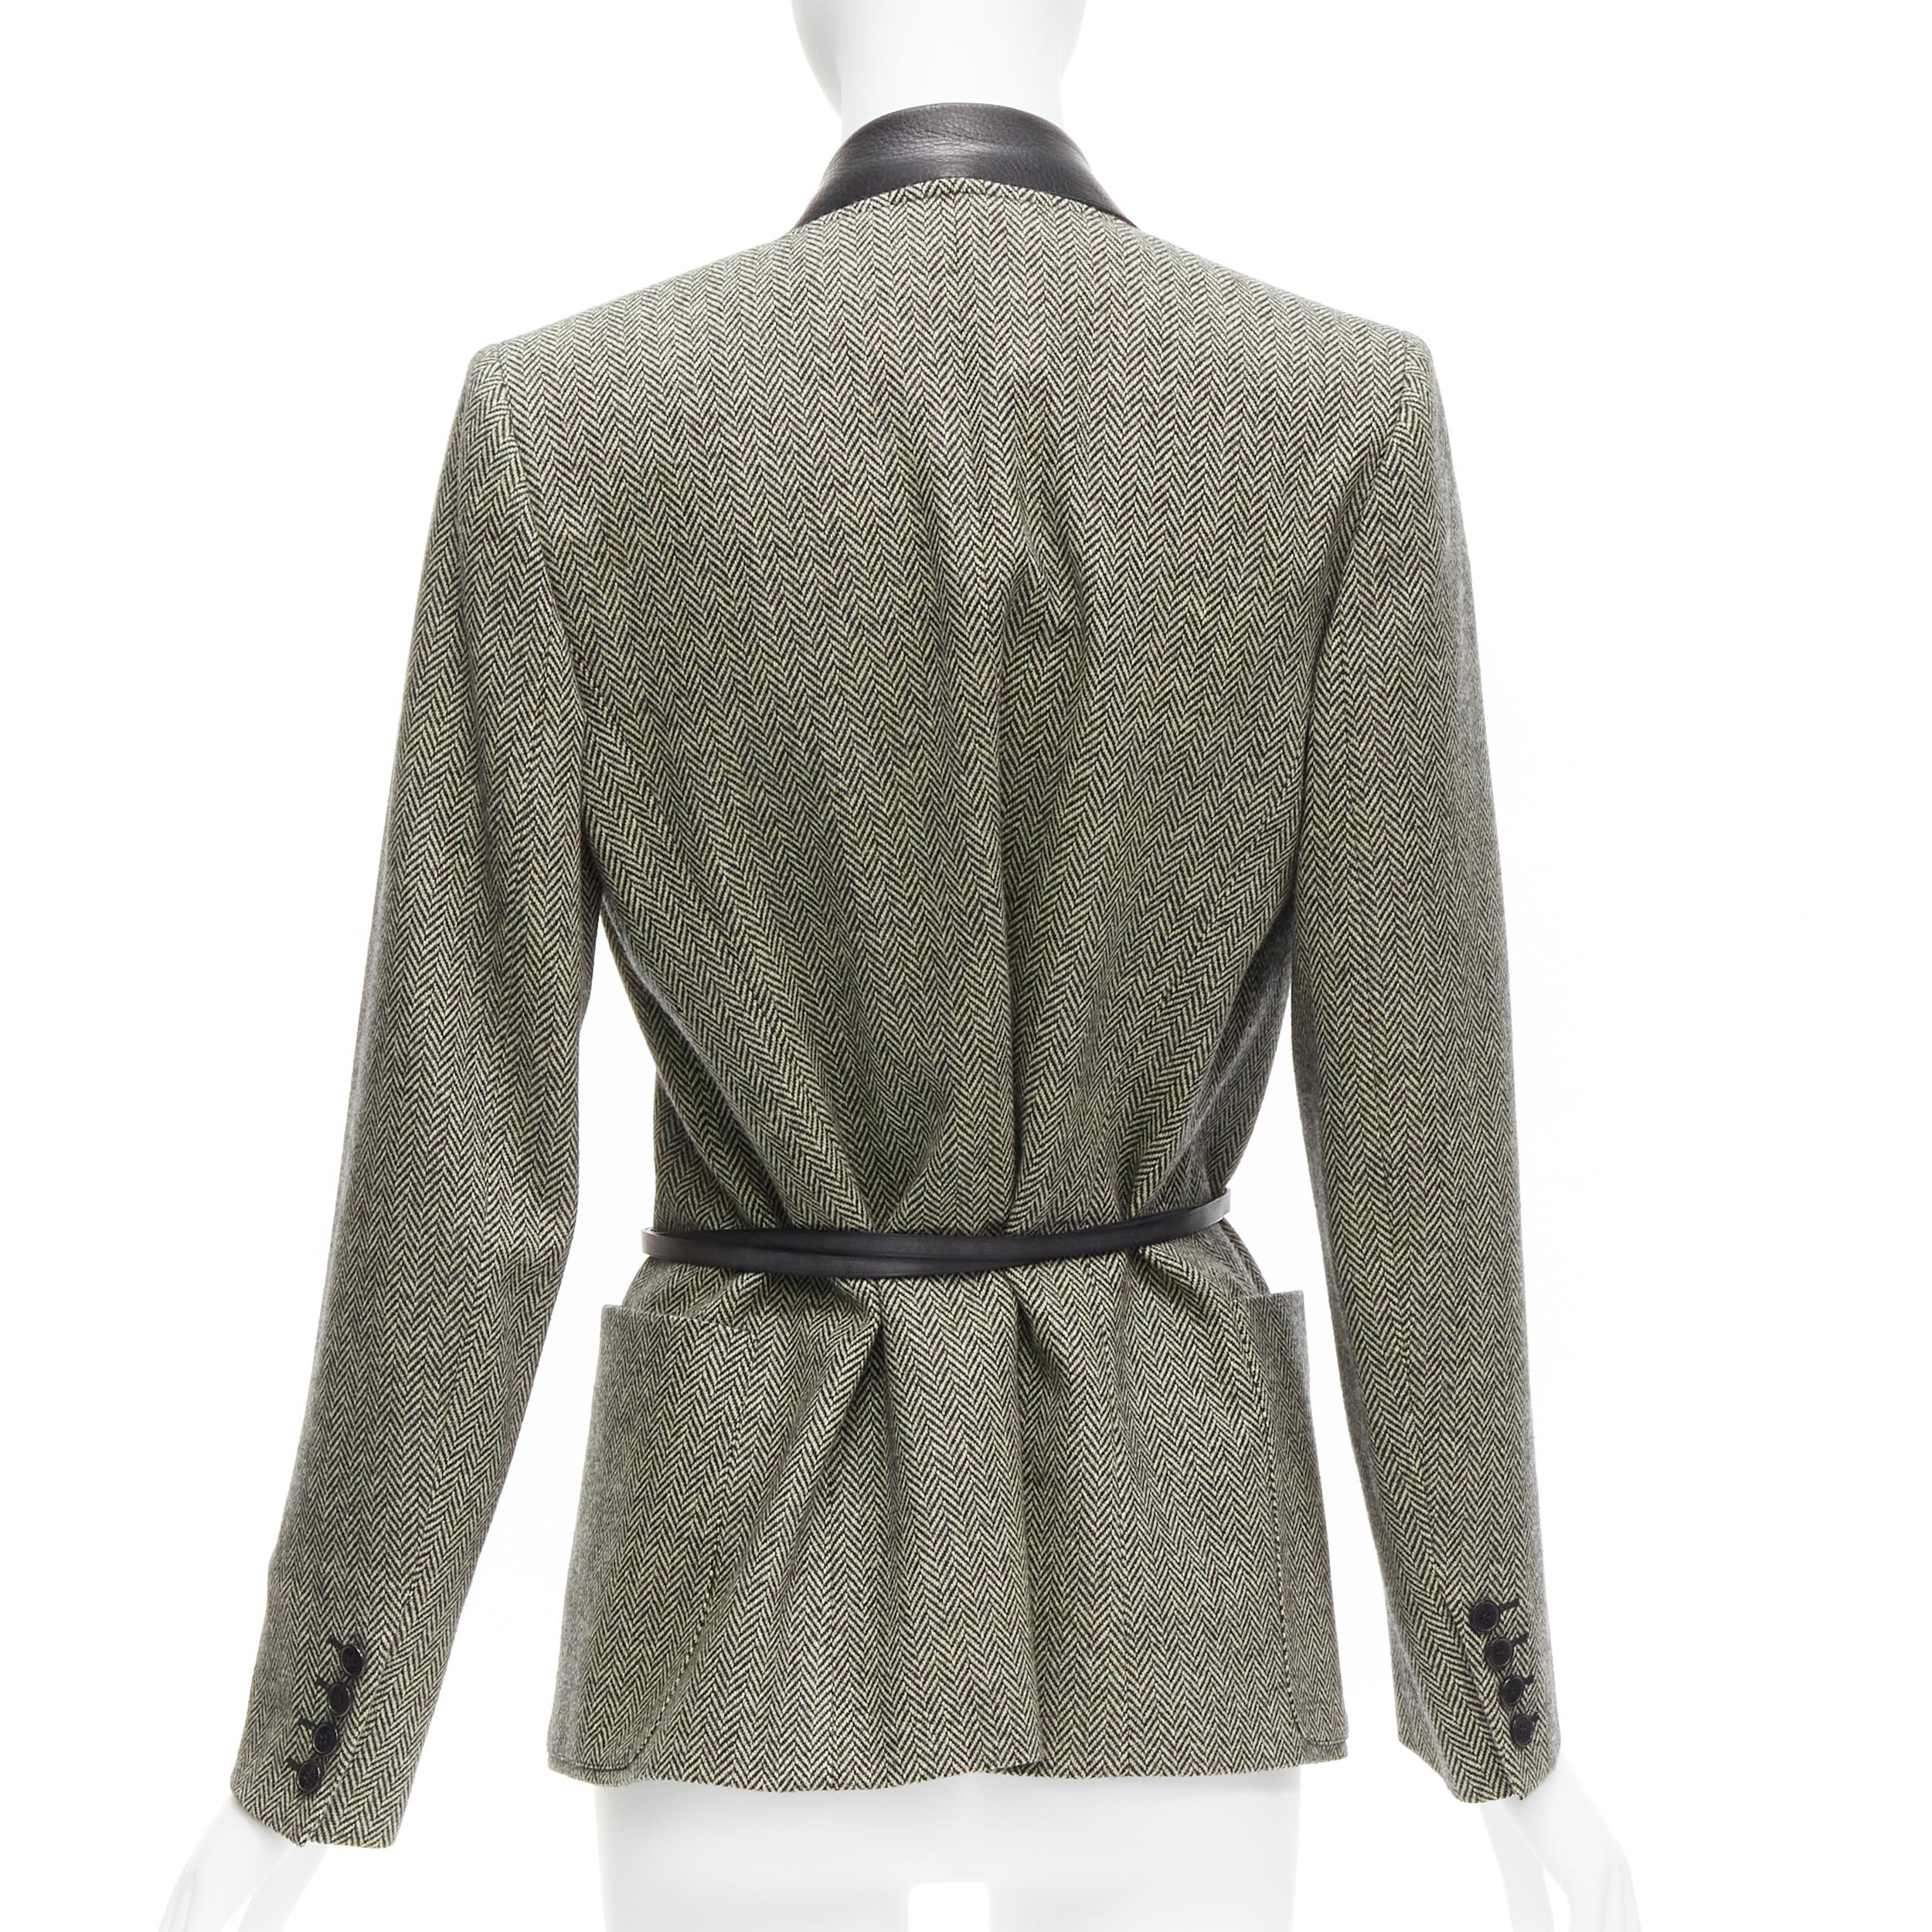 HERMES Jean Paul Gaultier virgin wool cashmere leather collar blazer FR40 L 2